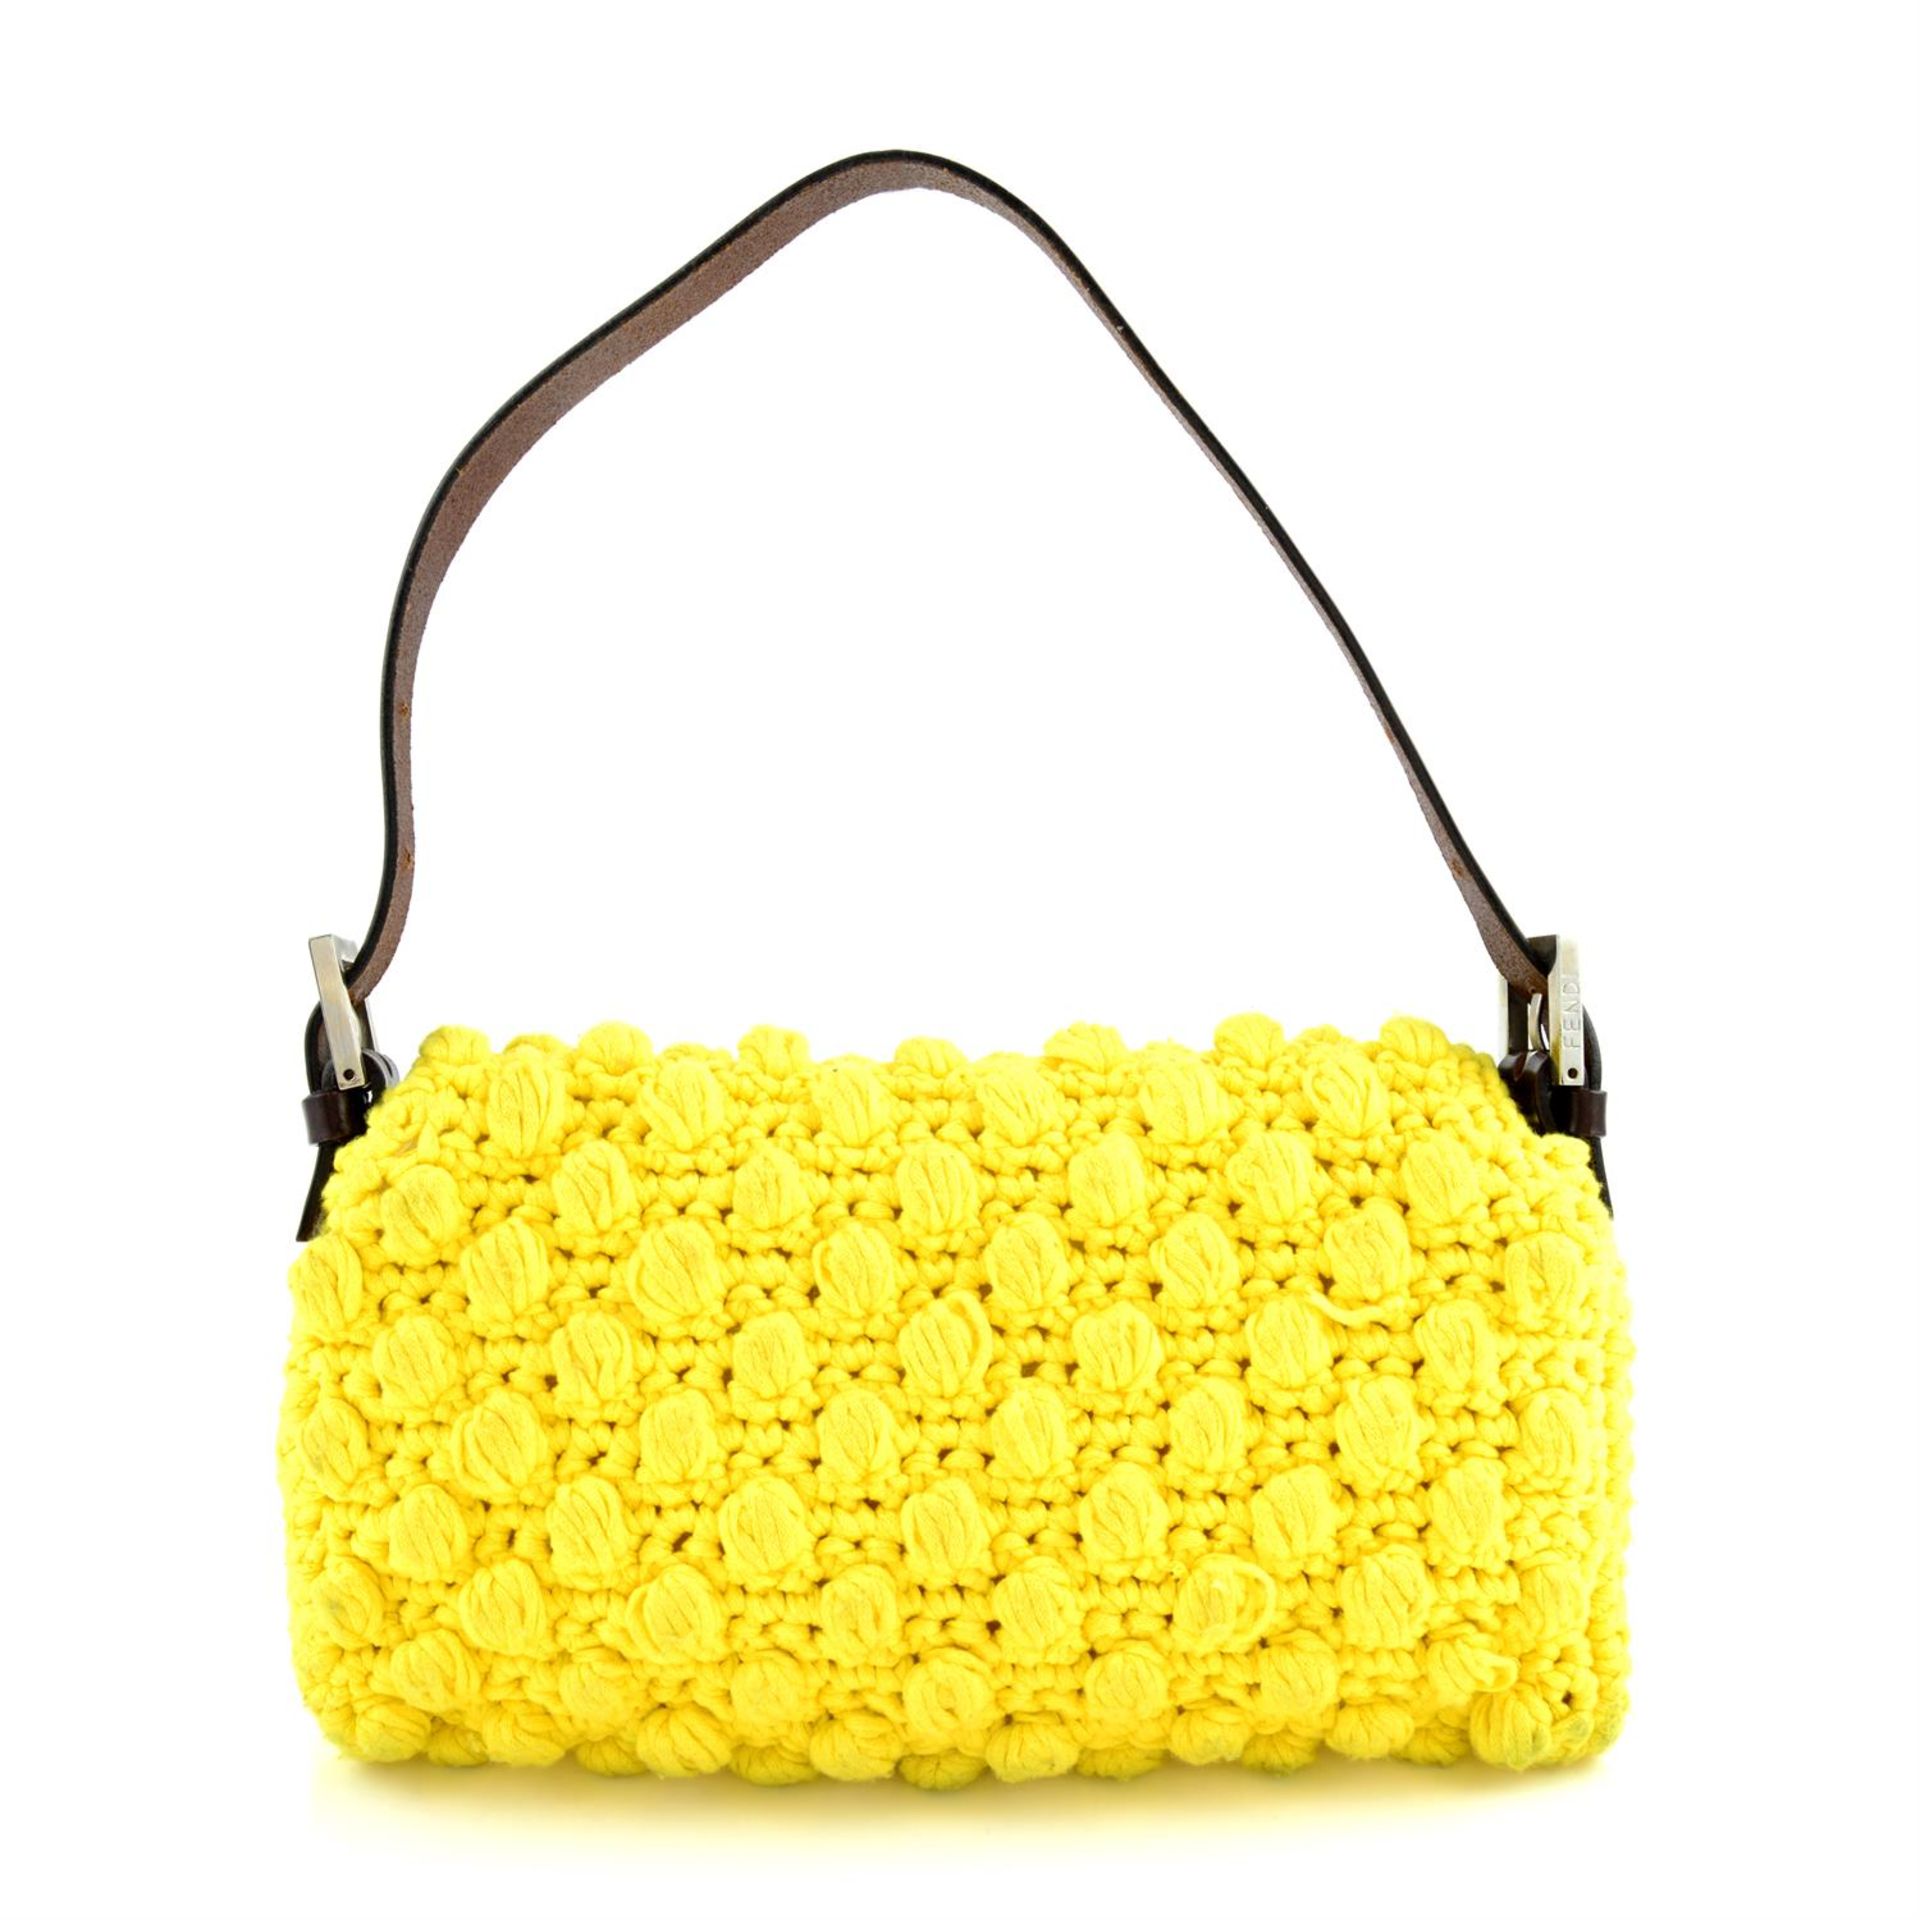 Fendi - Crochet Baguette bag. - Image 2 of 3